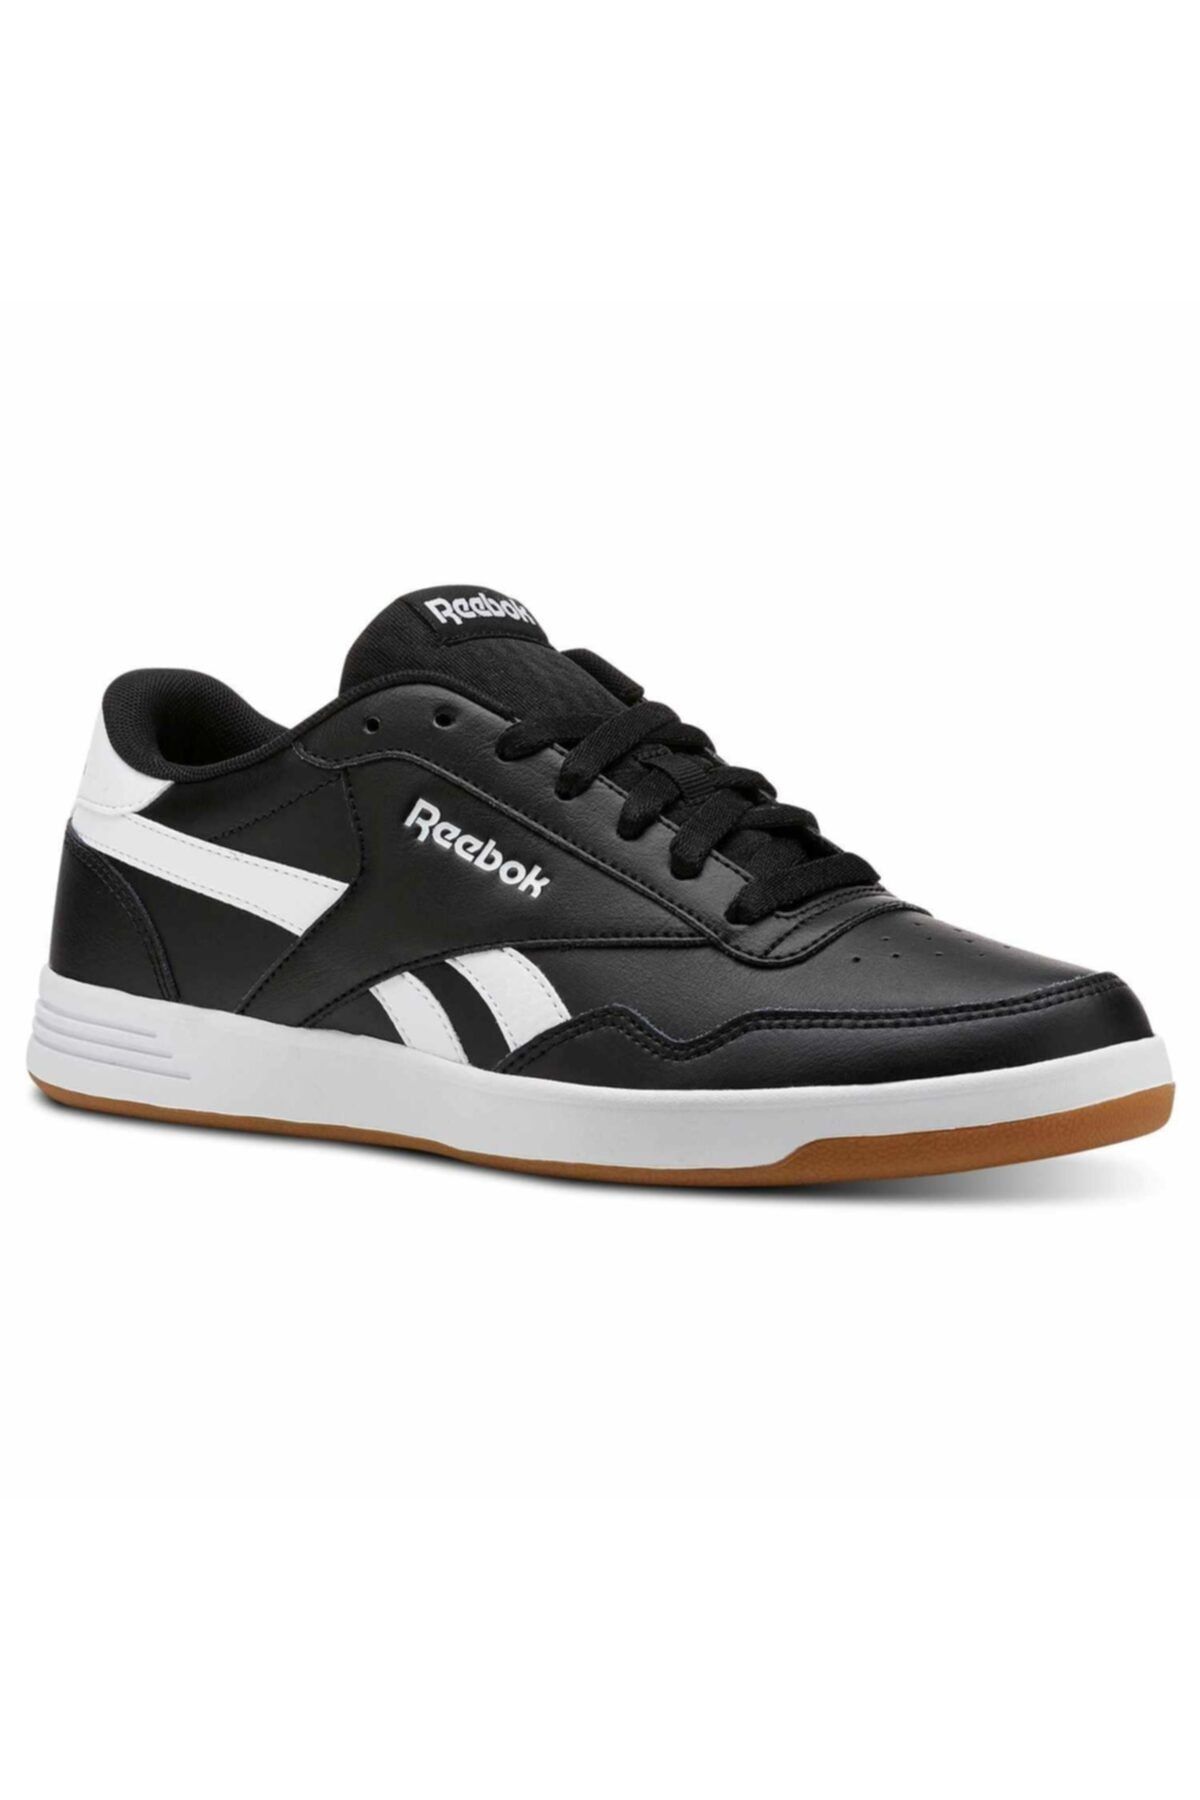 Reebok Reebok Royal Techque T Siyah Beyaz Erkek Sneaker Ayakkabı 100351421